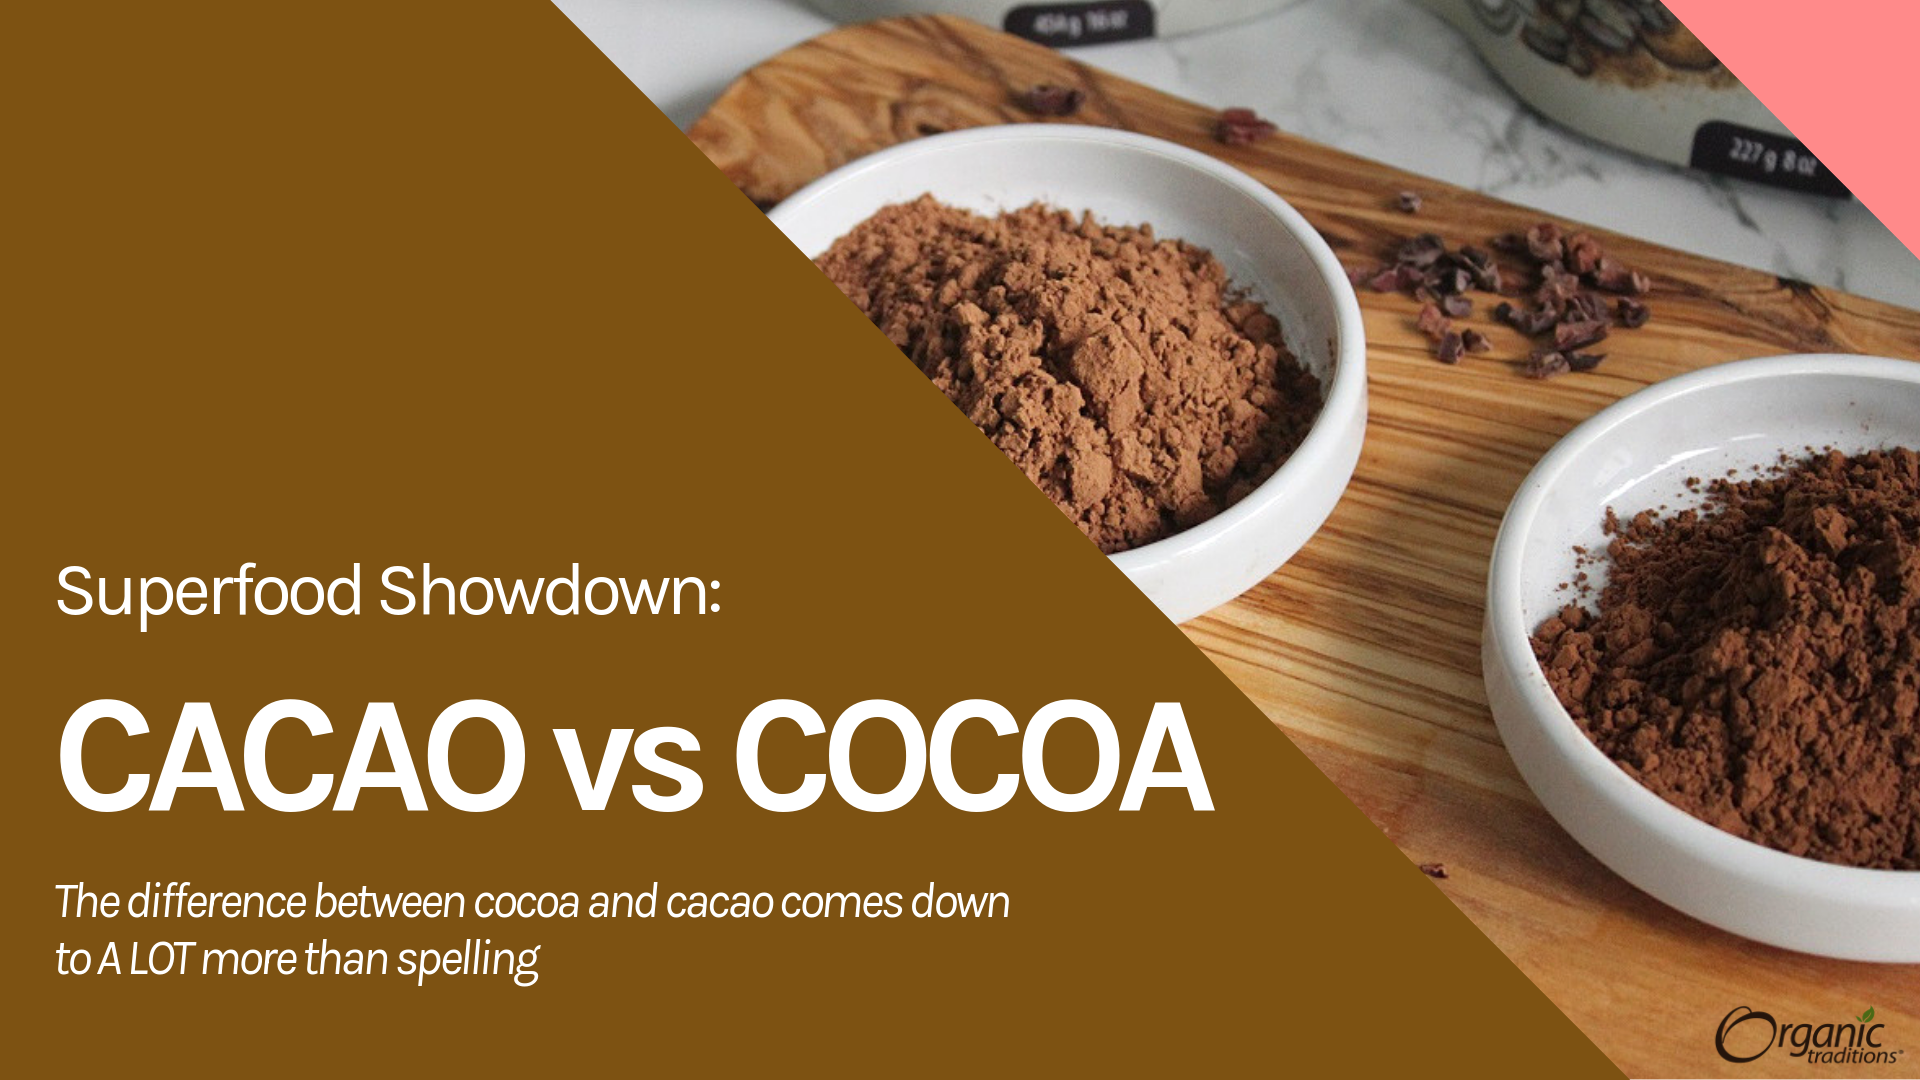 Superfood Showdown: Cacao vs Cocoa